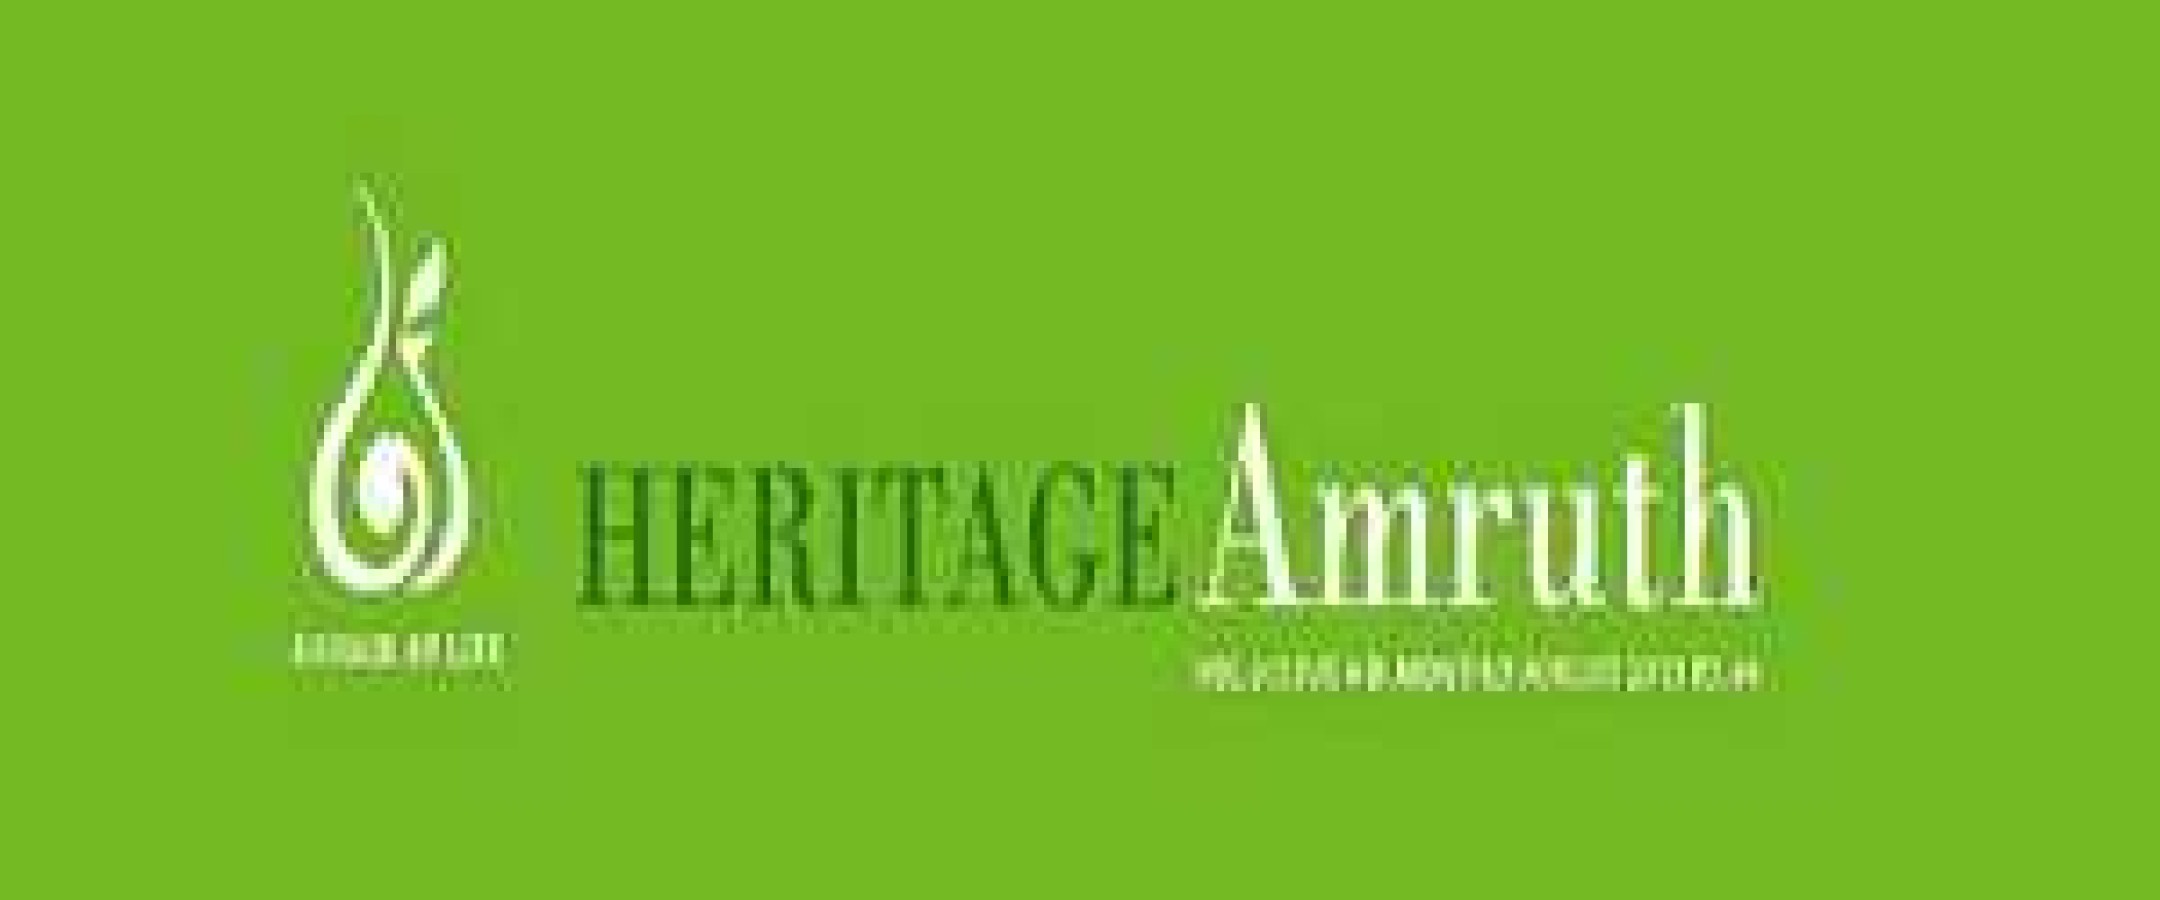 Heritage Amruth Advertising